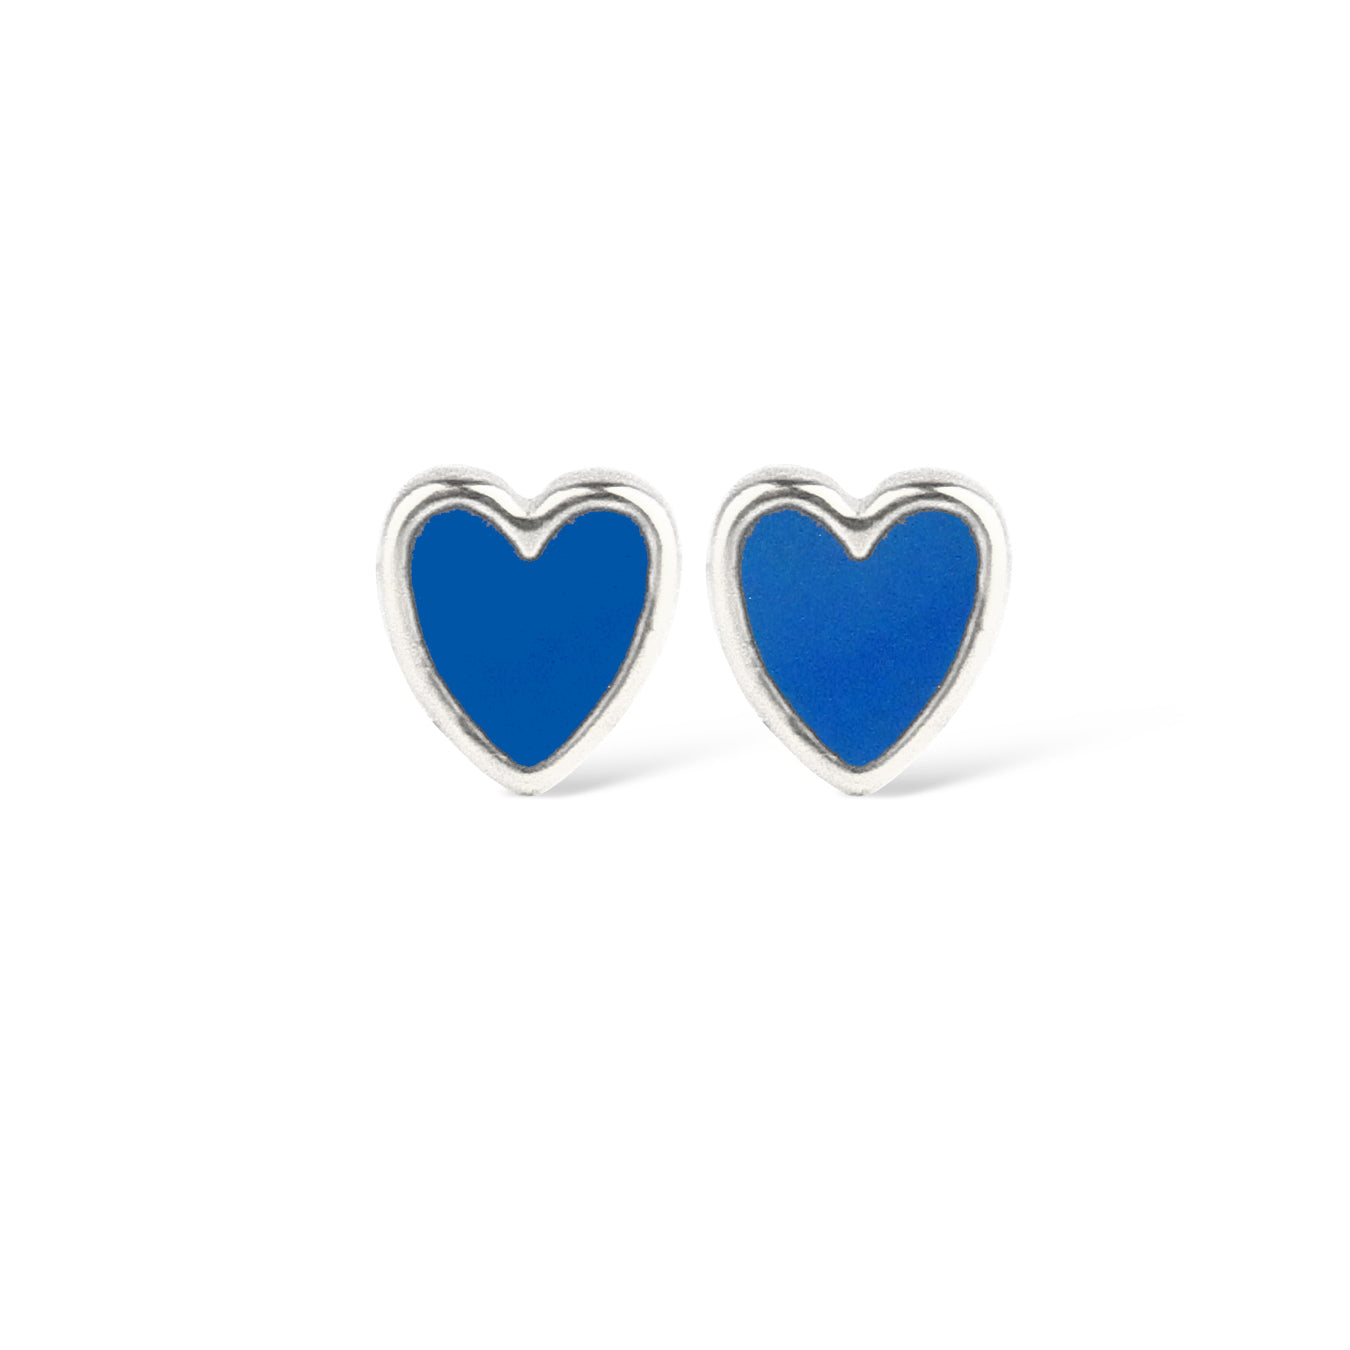 Se Jeberg Jewellery - Baby Heart Blue Enamel ørestikker Sølv sterlingsølv hos Vibholm.dk